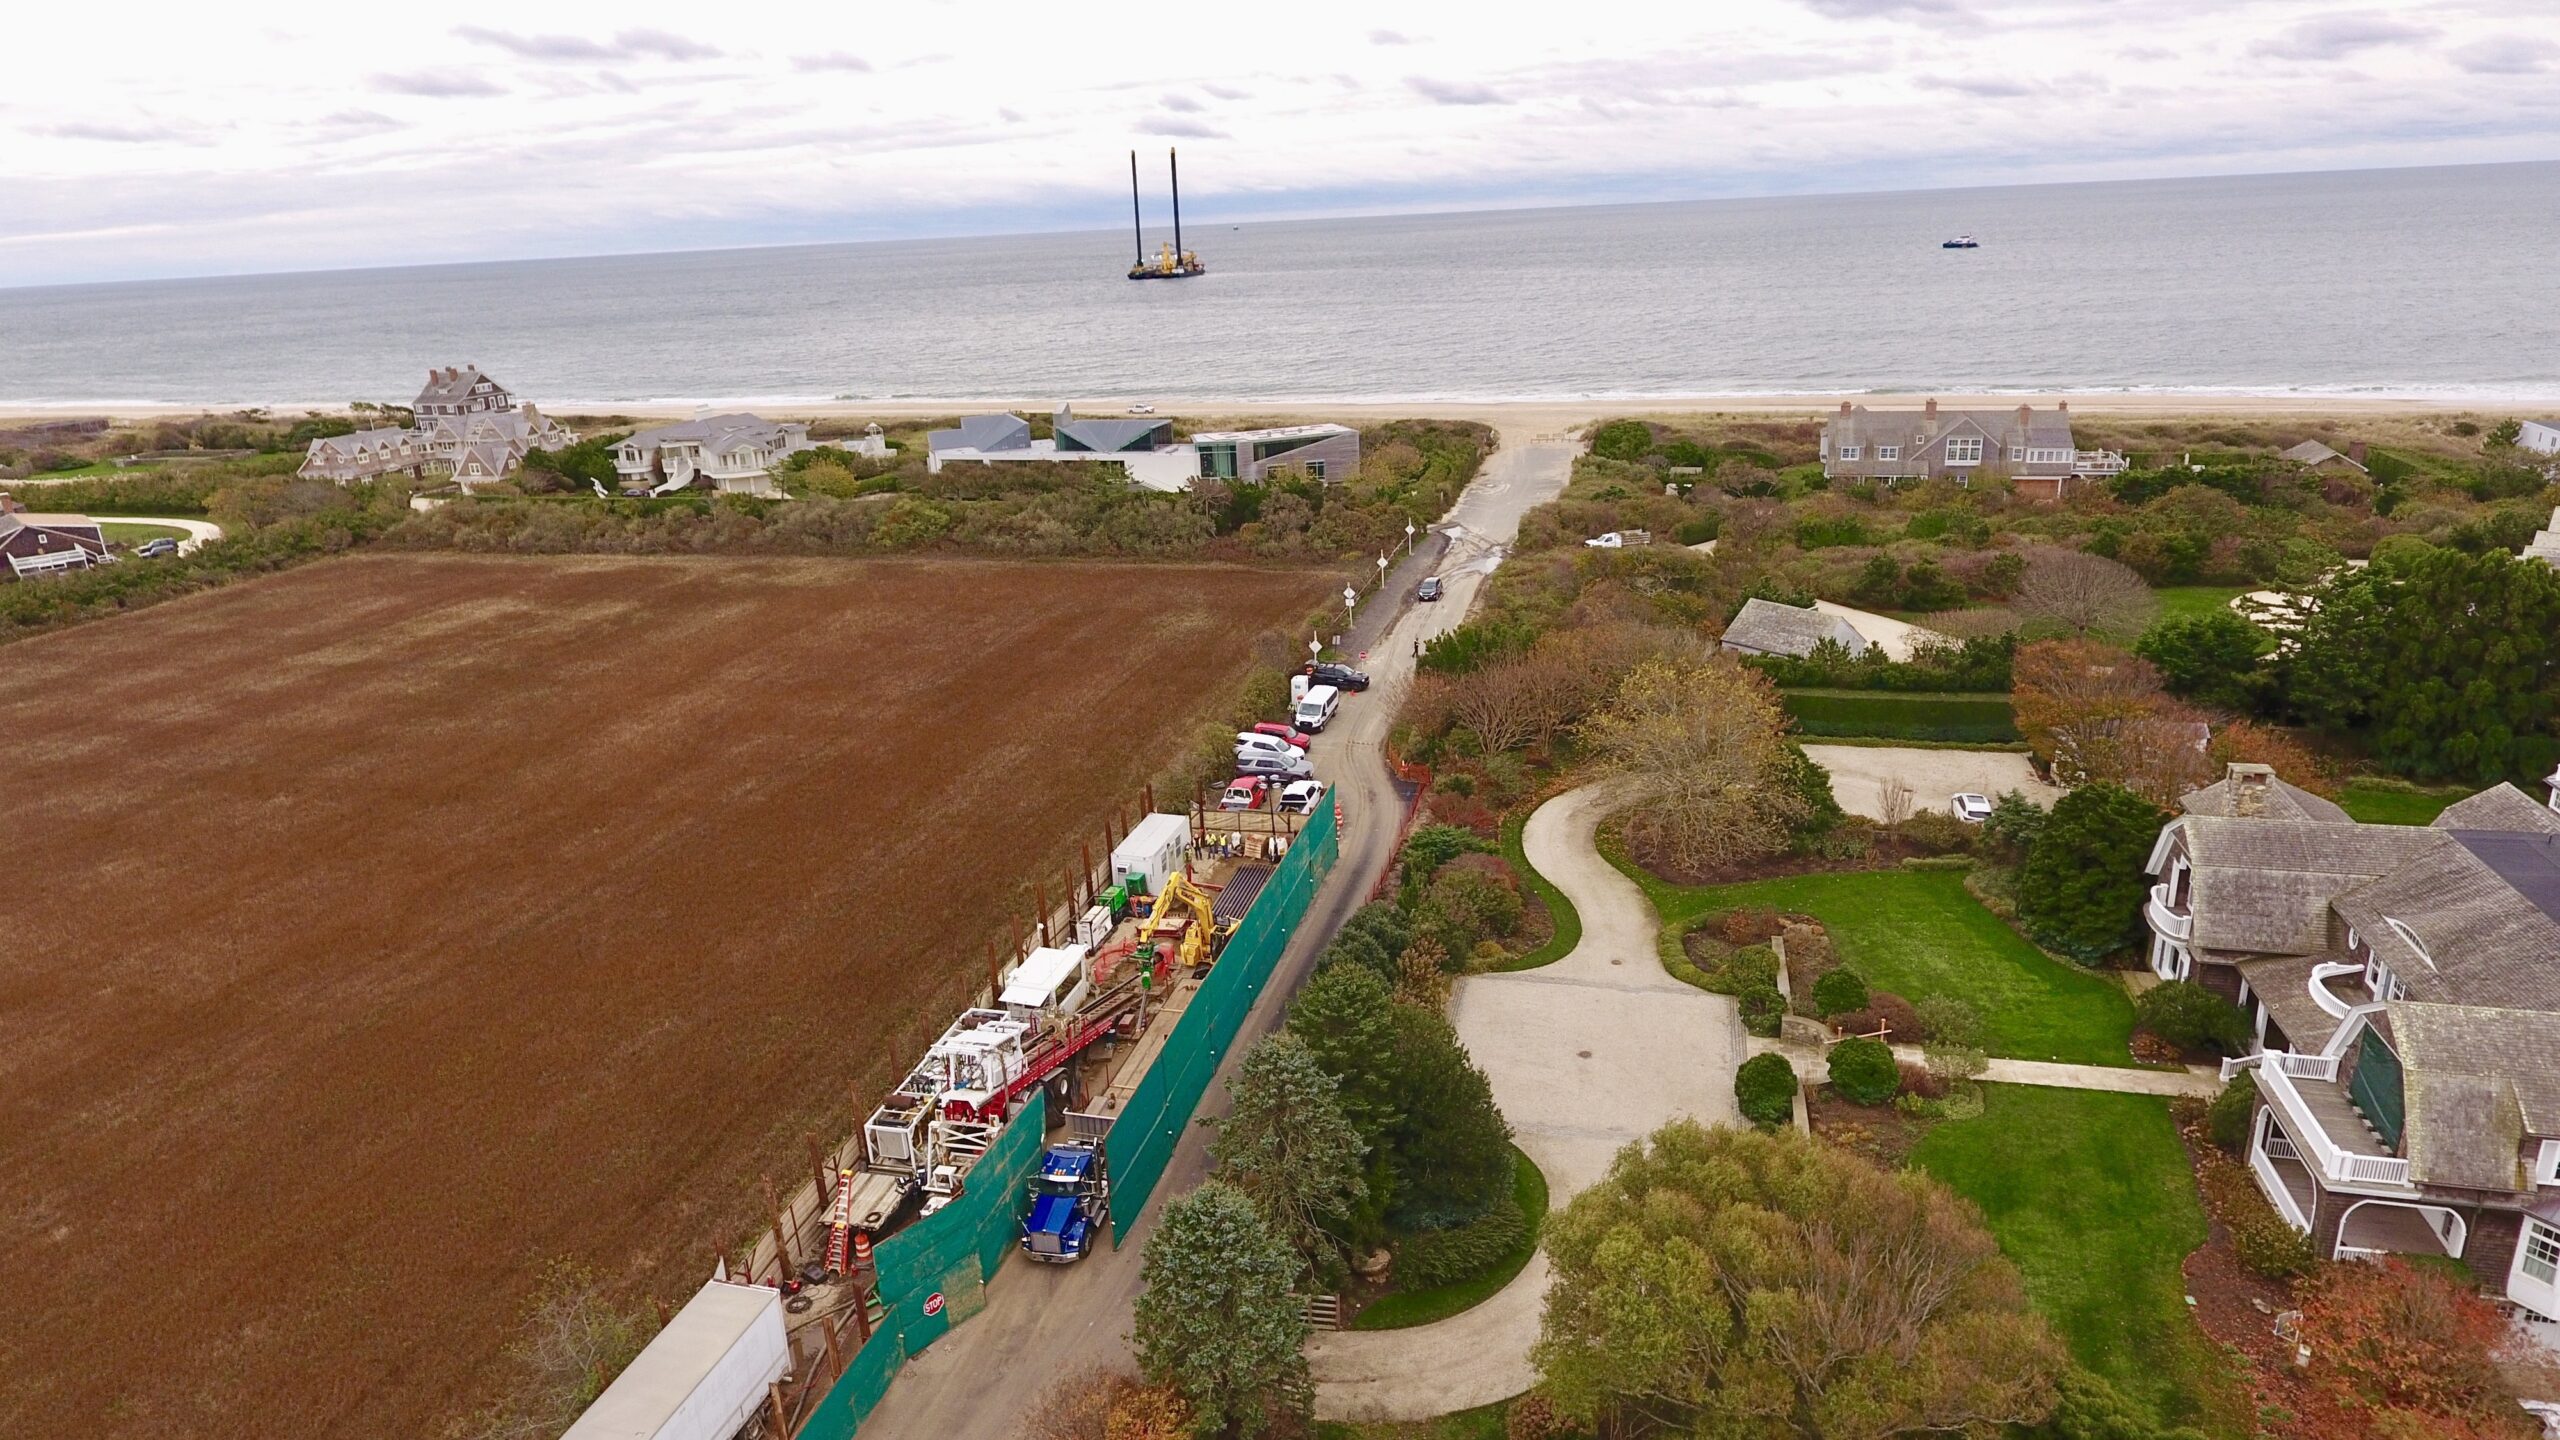 The horizontal drilling equipment began drilling pilot borings on Beach Lane this week.